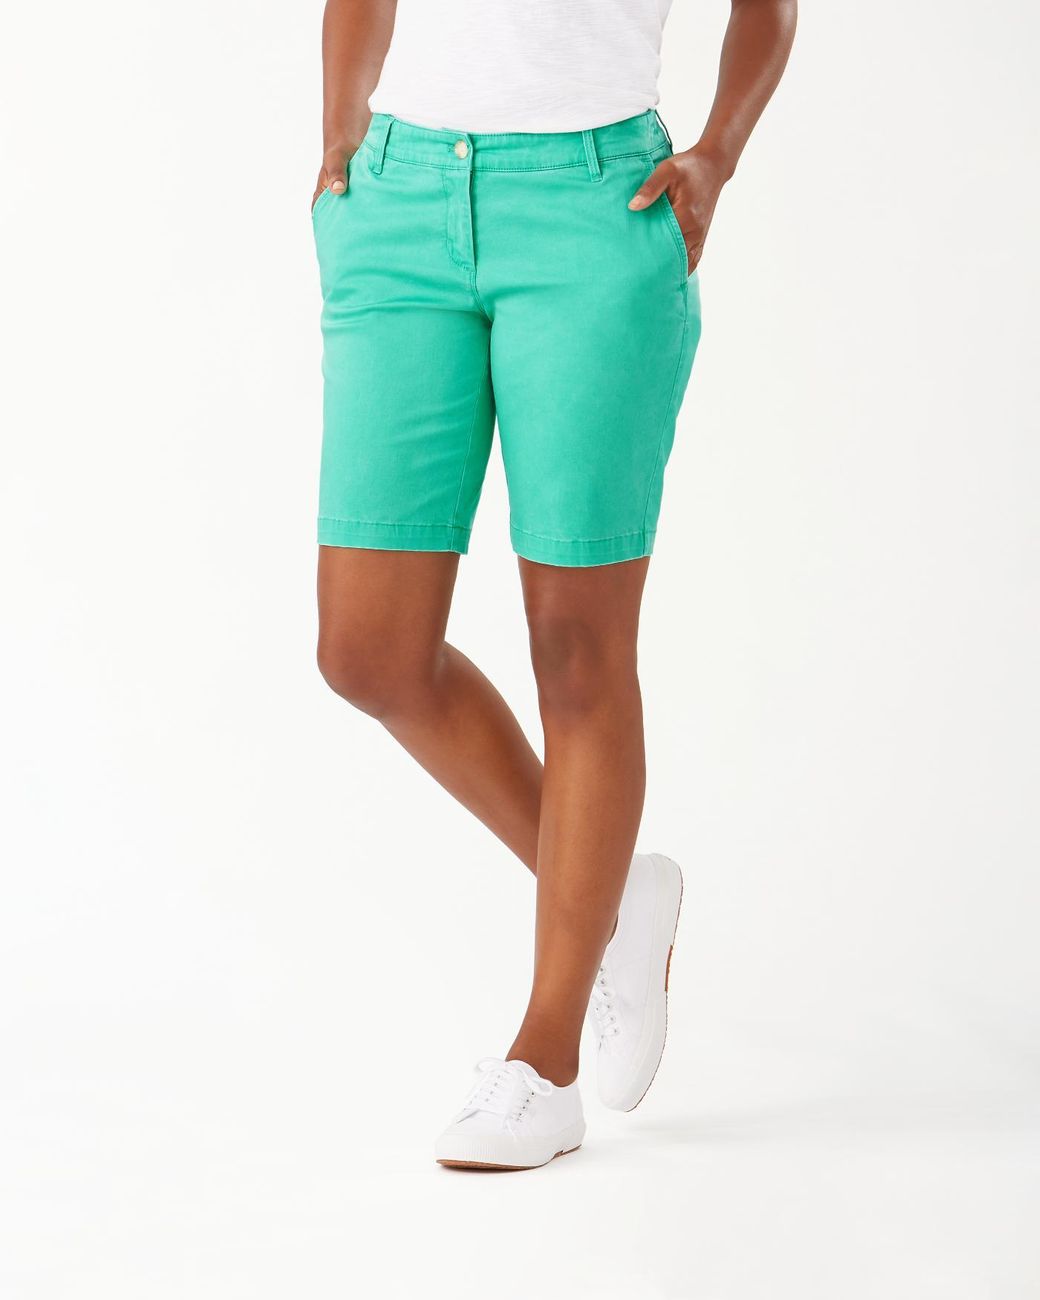 Tommy Bahama Cotton Boracay 10-inch Bermuda Shorts in Green - Lyst